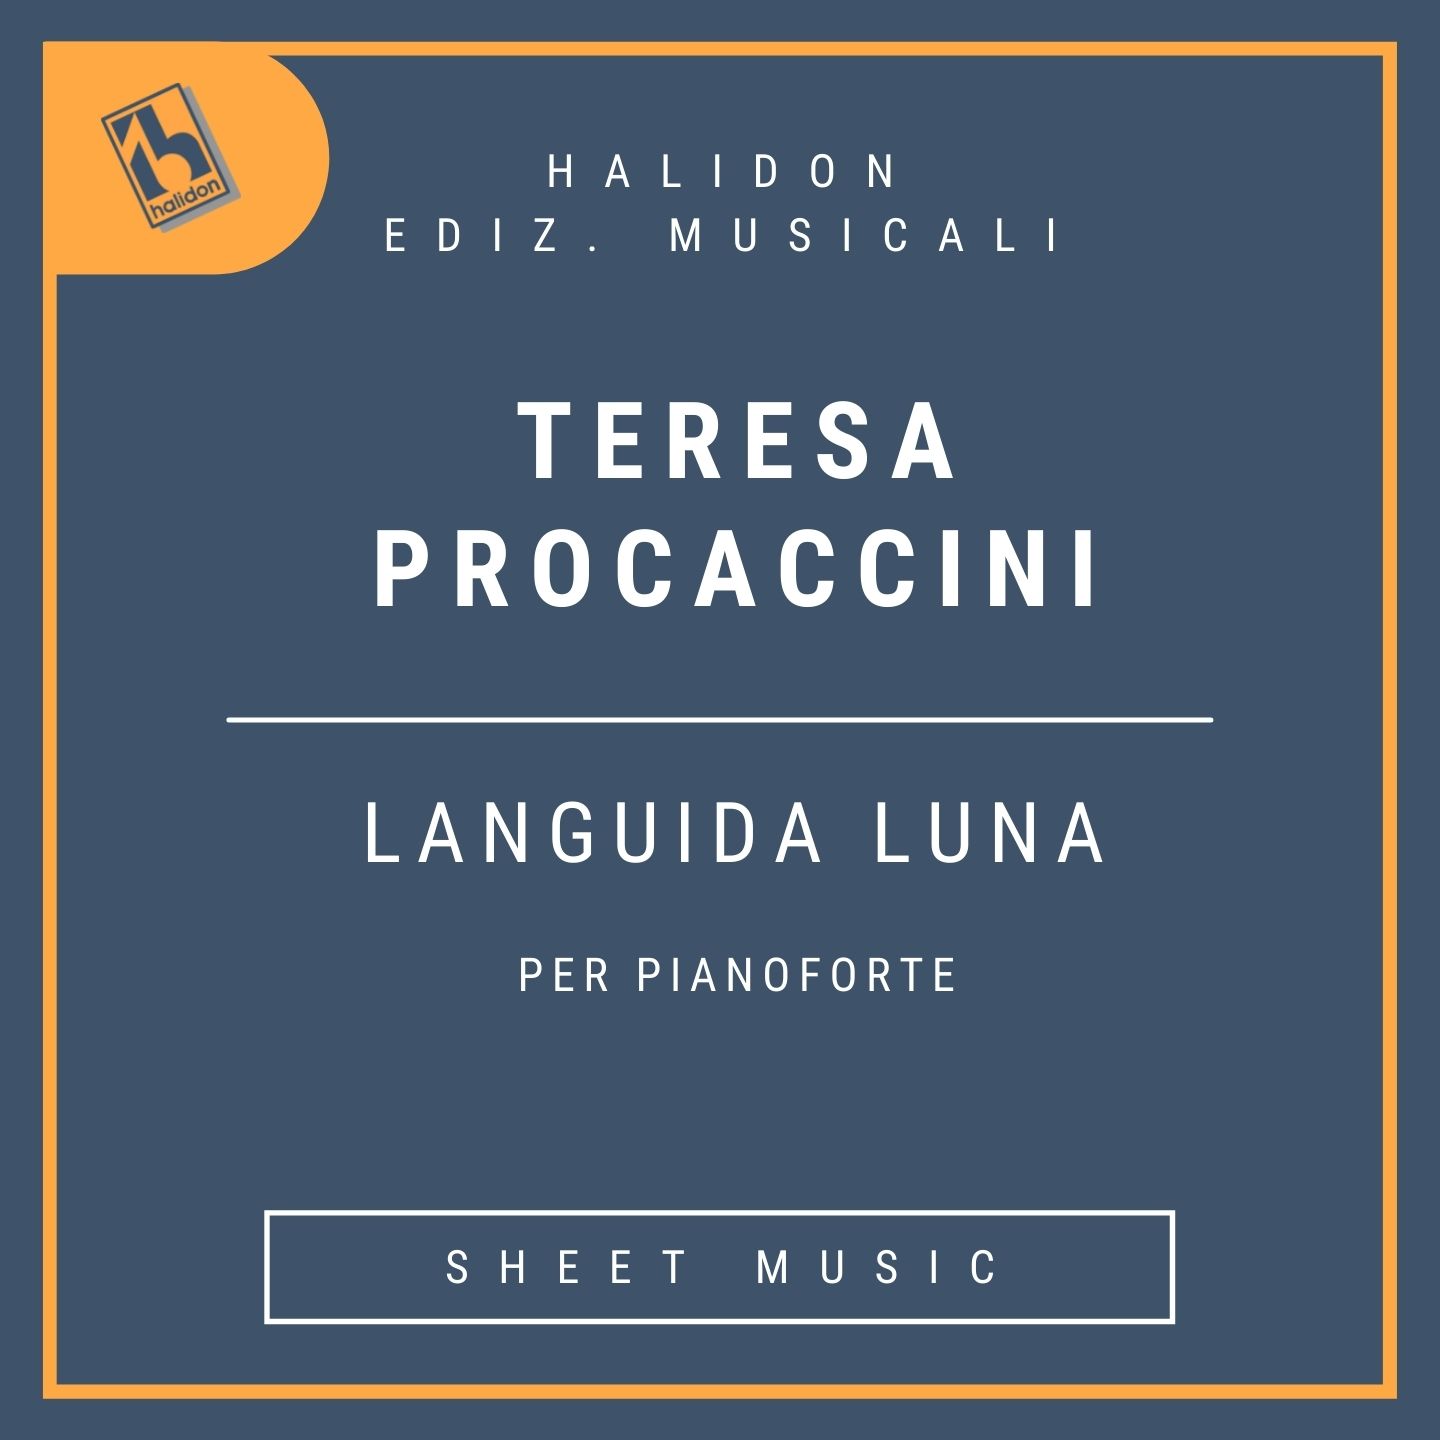 Teresa Procaccini - Languida luna